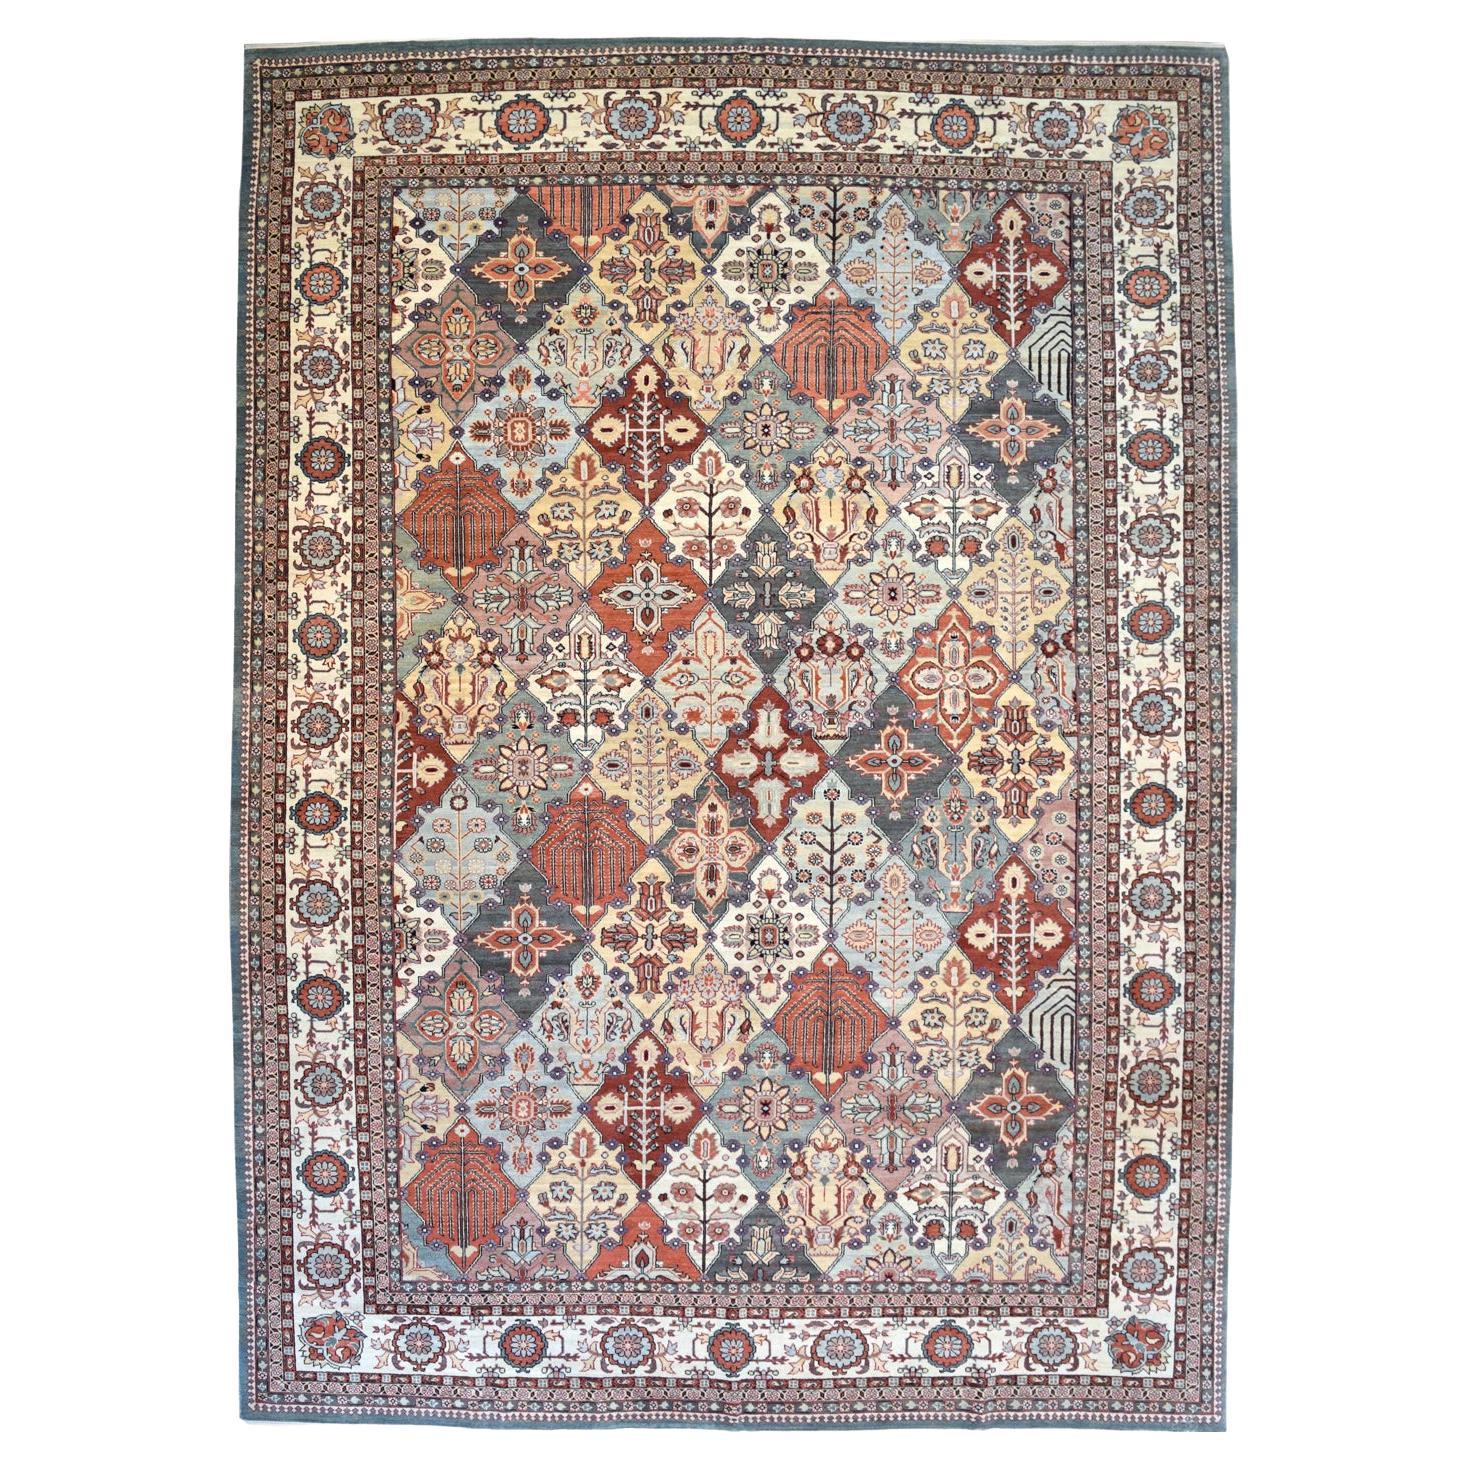 Hand-Knotted Wool, Persian Bakhtiari Carpet, Cream, Blue, Orange, Red, 10’ x 13’